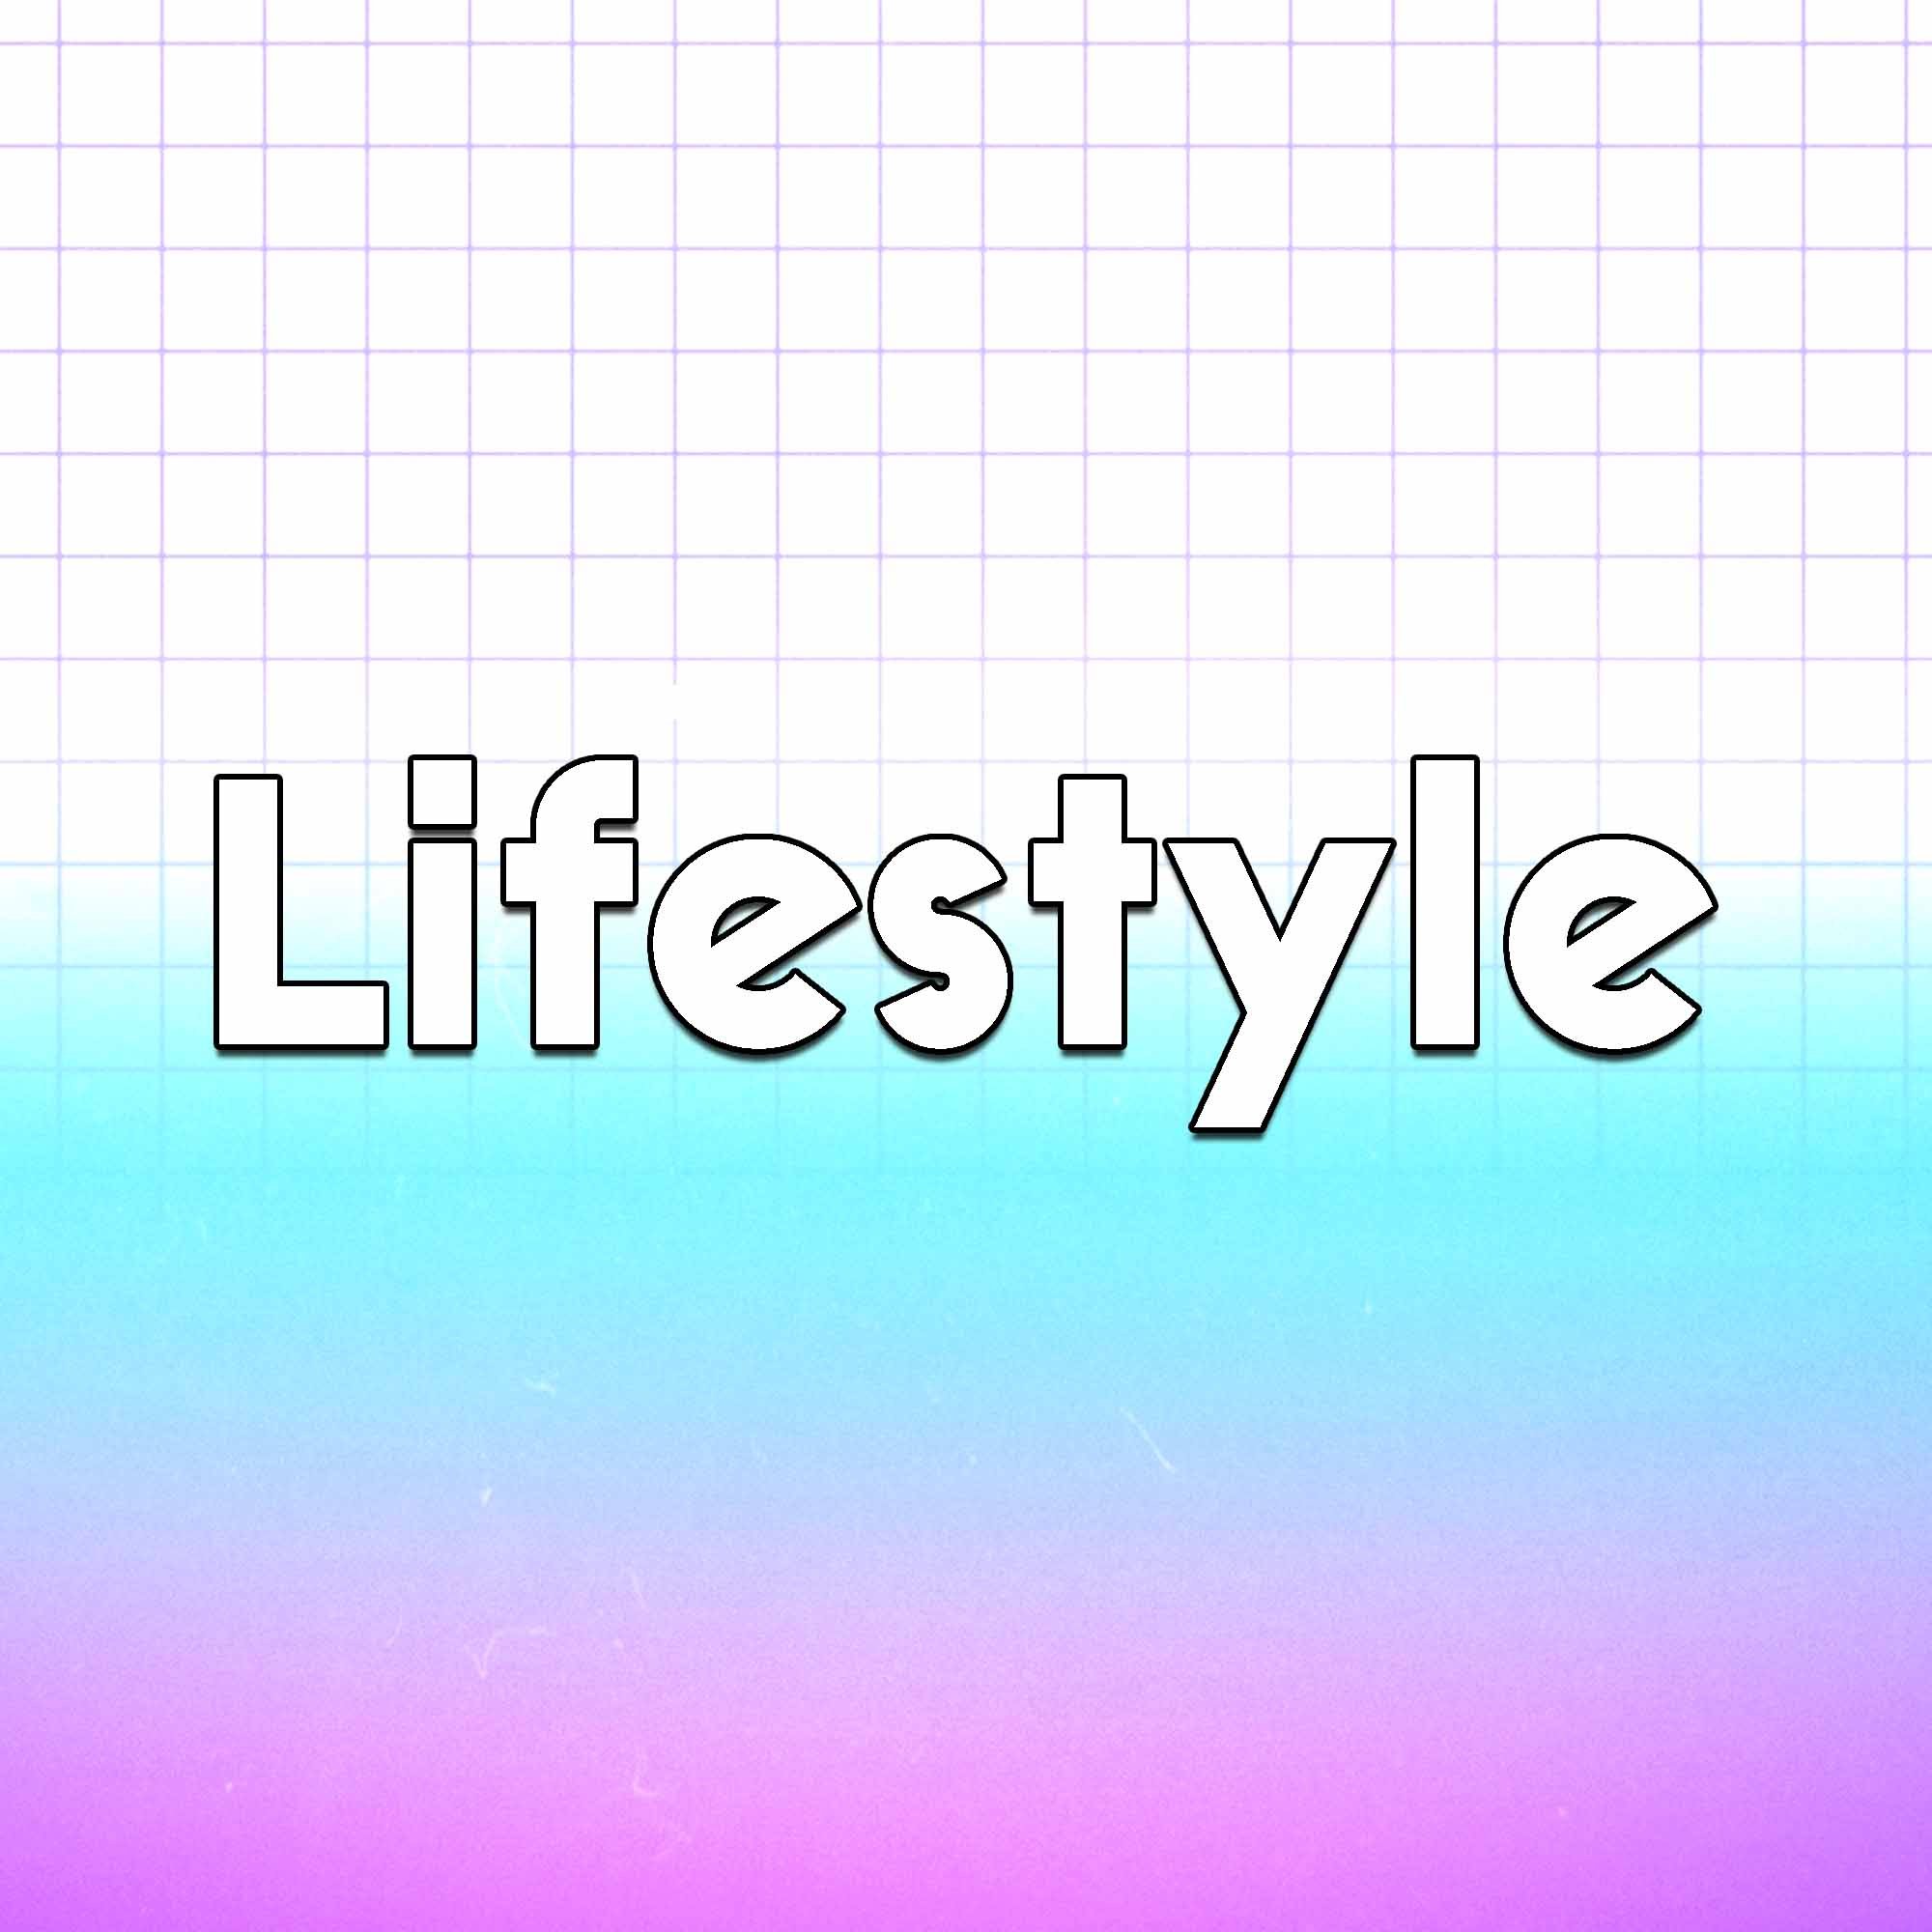 Blog categories - lifestyle-min.jpg